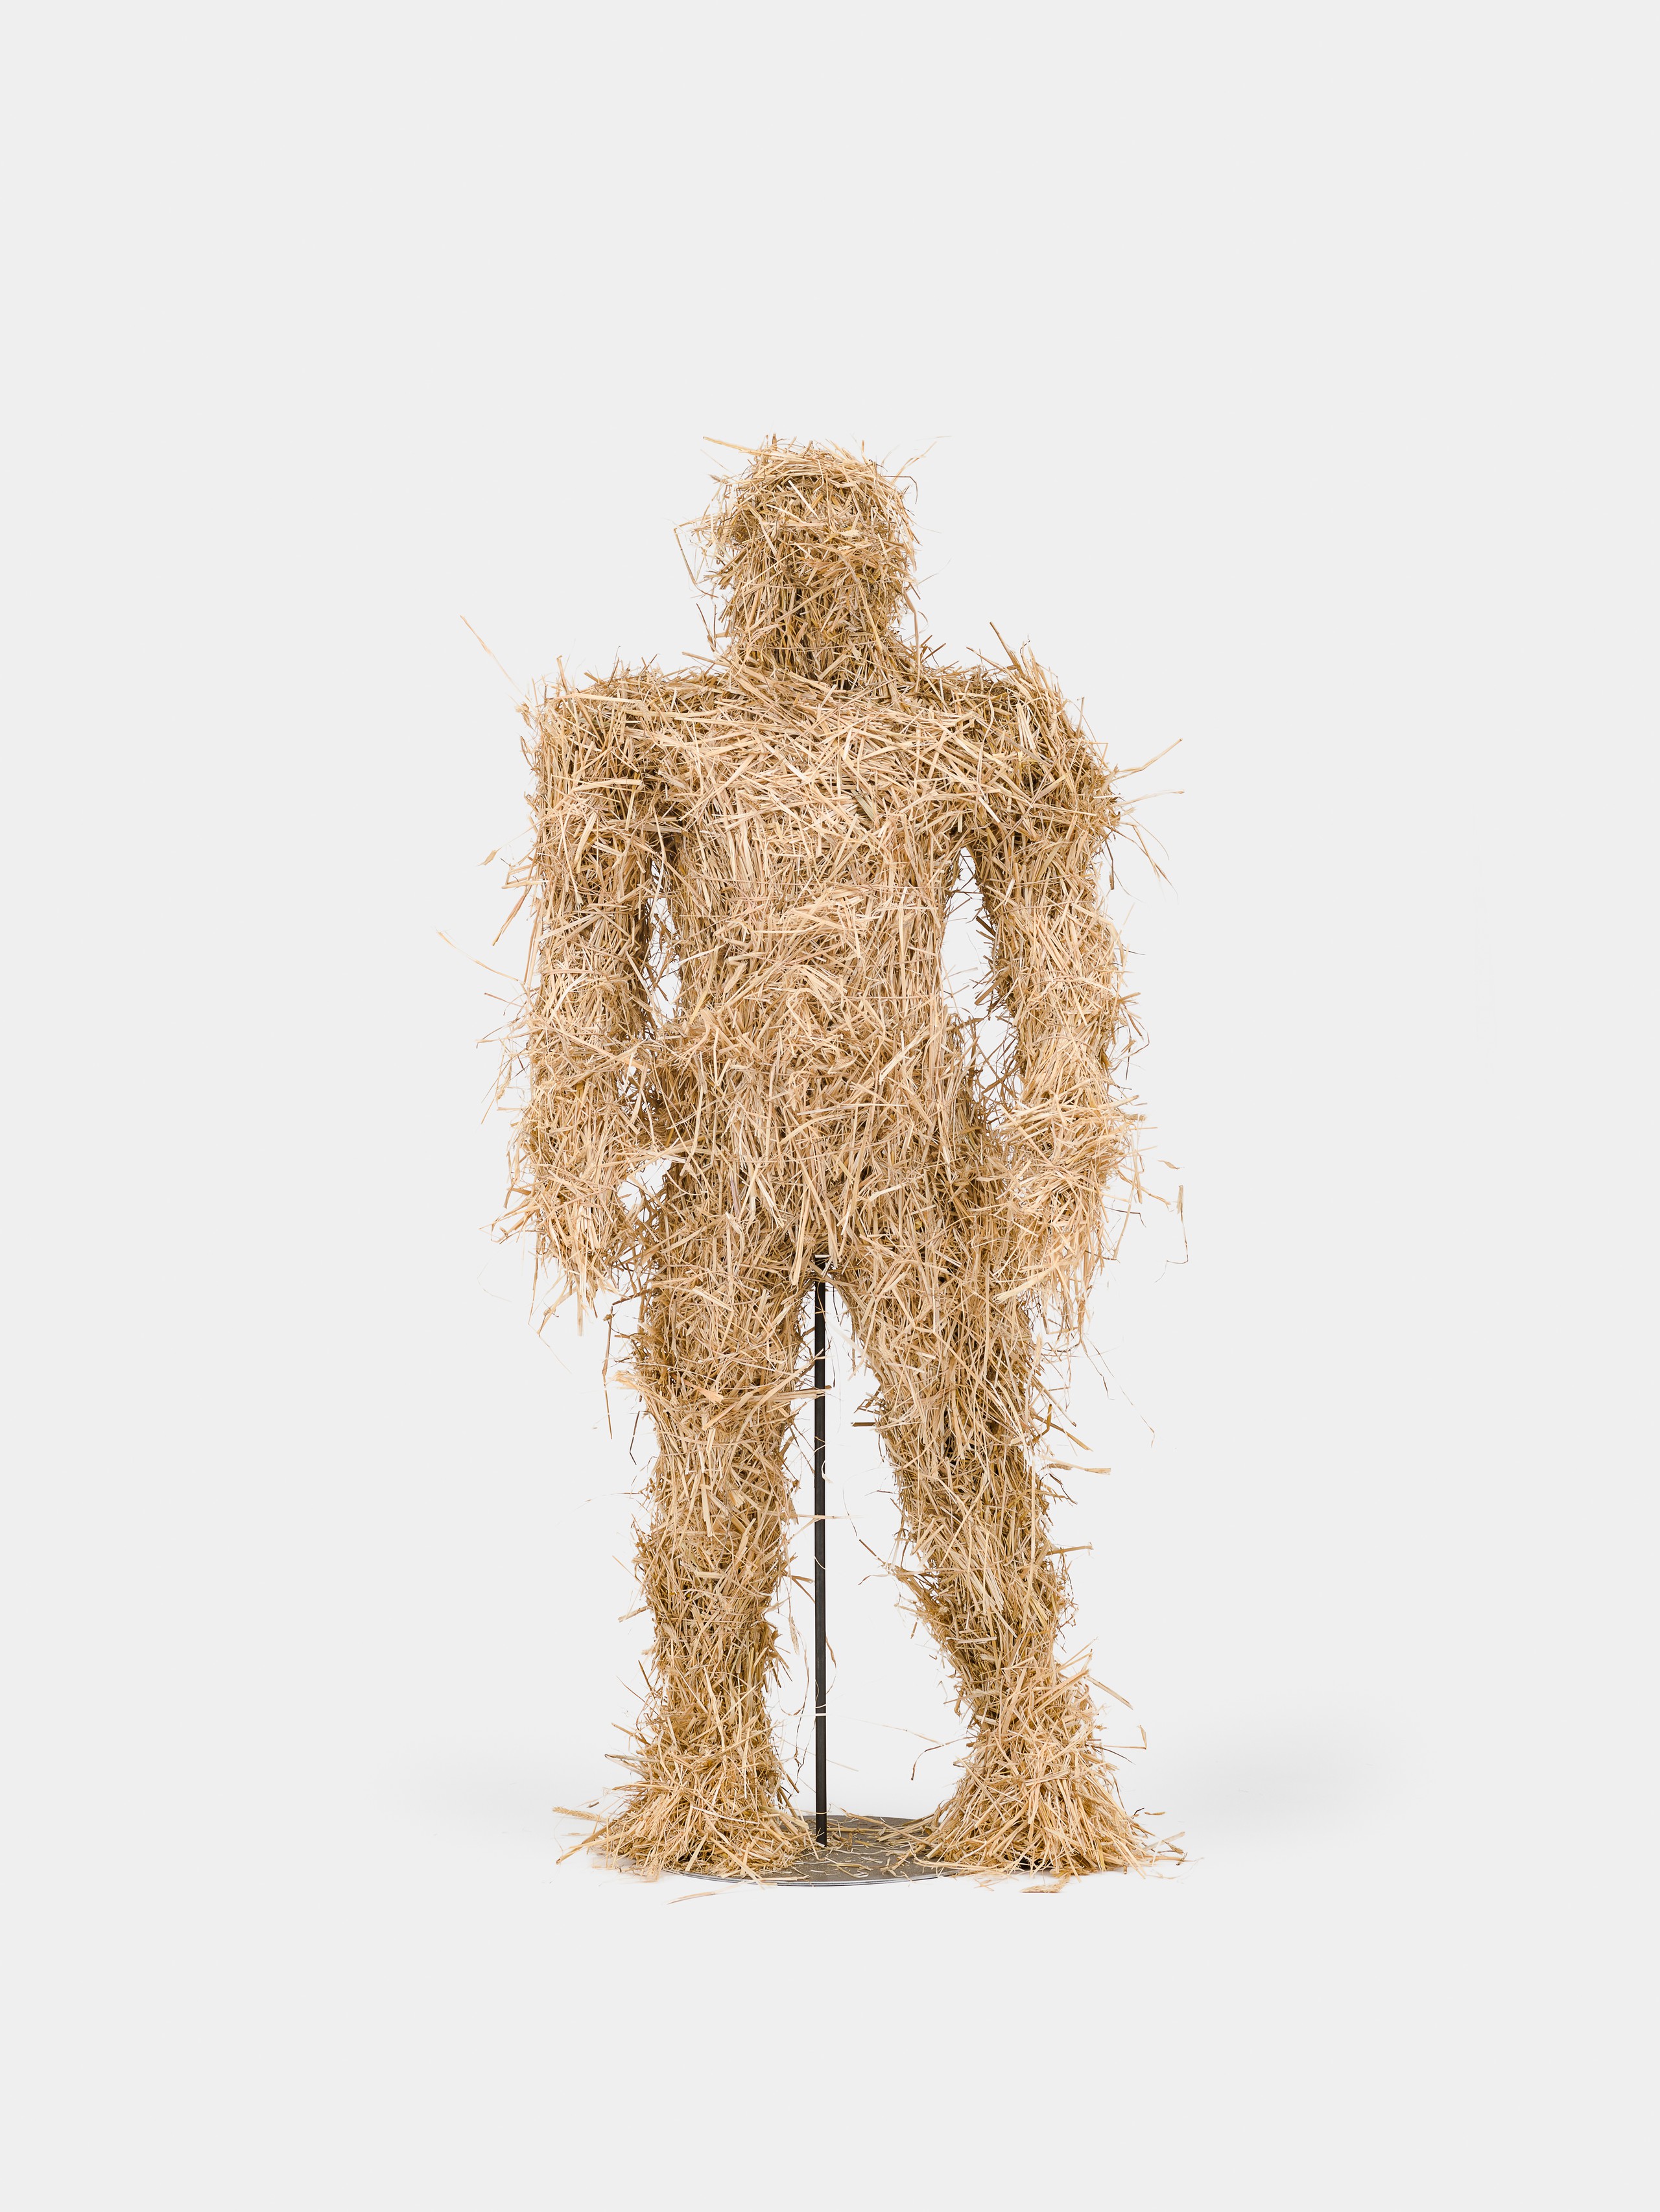 Kaspar Müller, Untitled, 2022, Straw, fiberglass, wood, steel 195 × 90 × 65 cm, 77 × 35 1/2 × 25 1/2 in